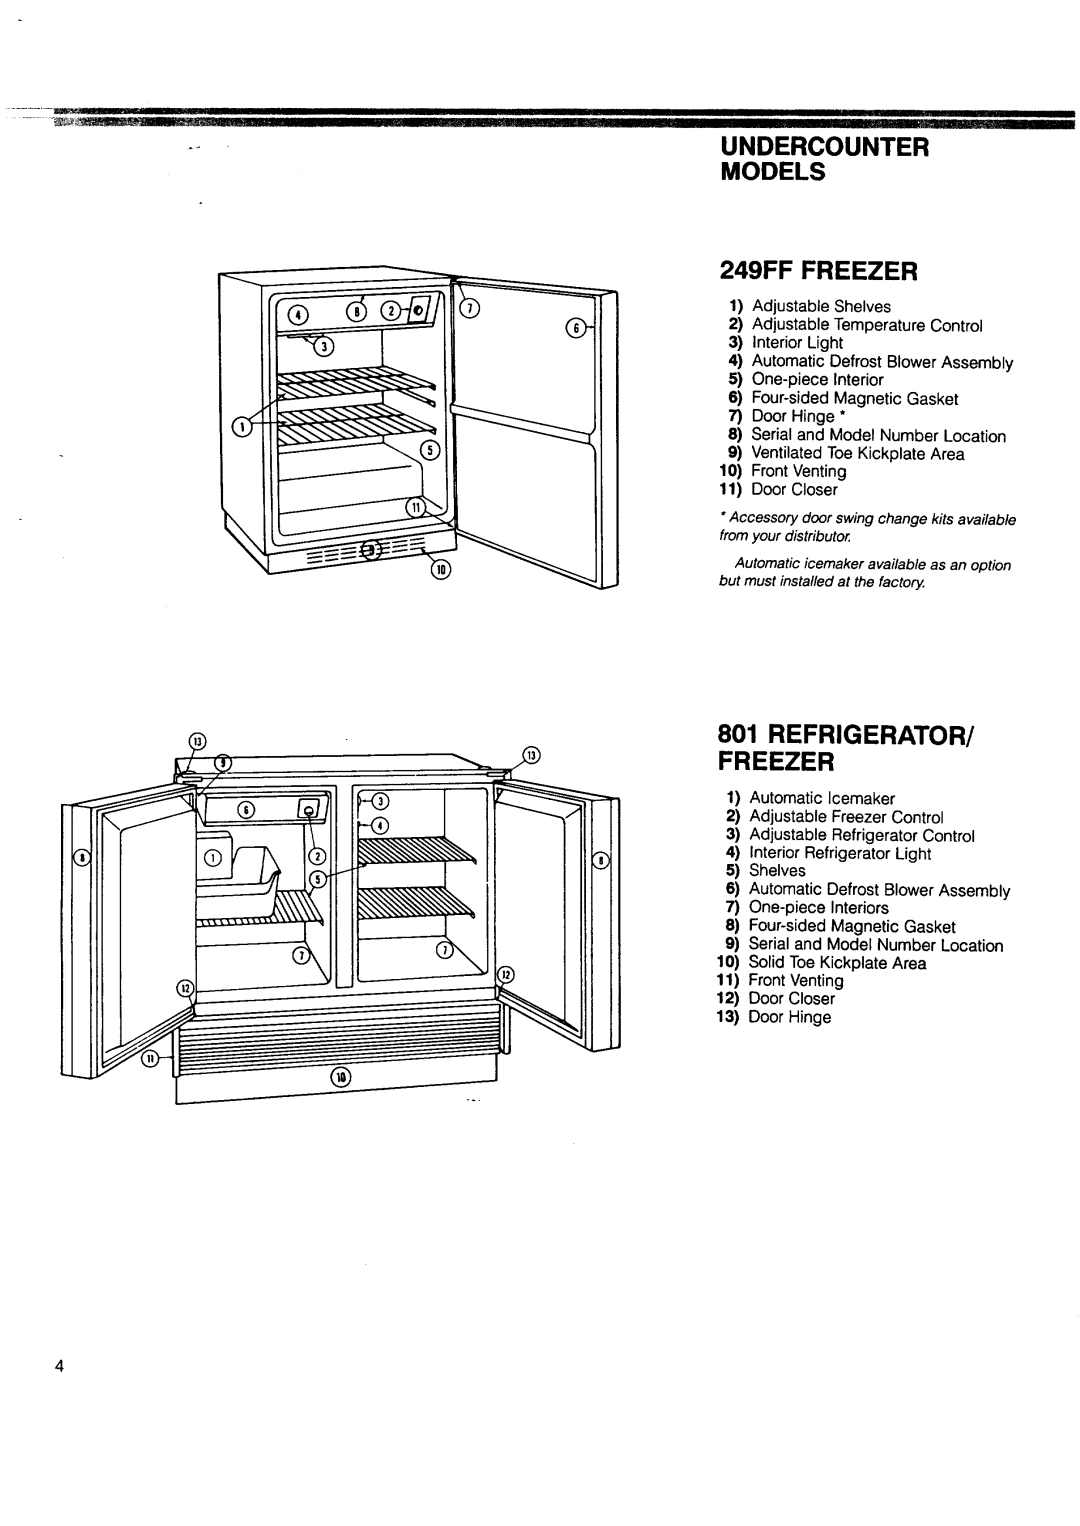 Sears 801RFD, 249RP, 245 manual Refrigerator/ Freezer, Iiiii, 249FF FREEZER, Undercounter, Models 